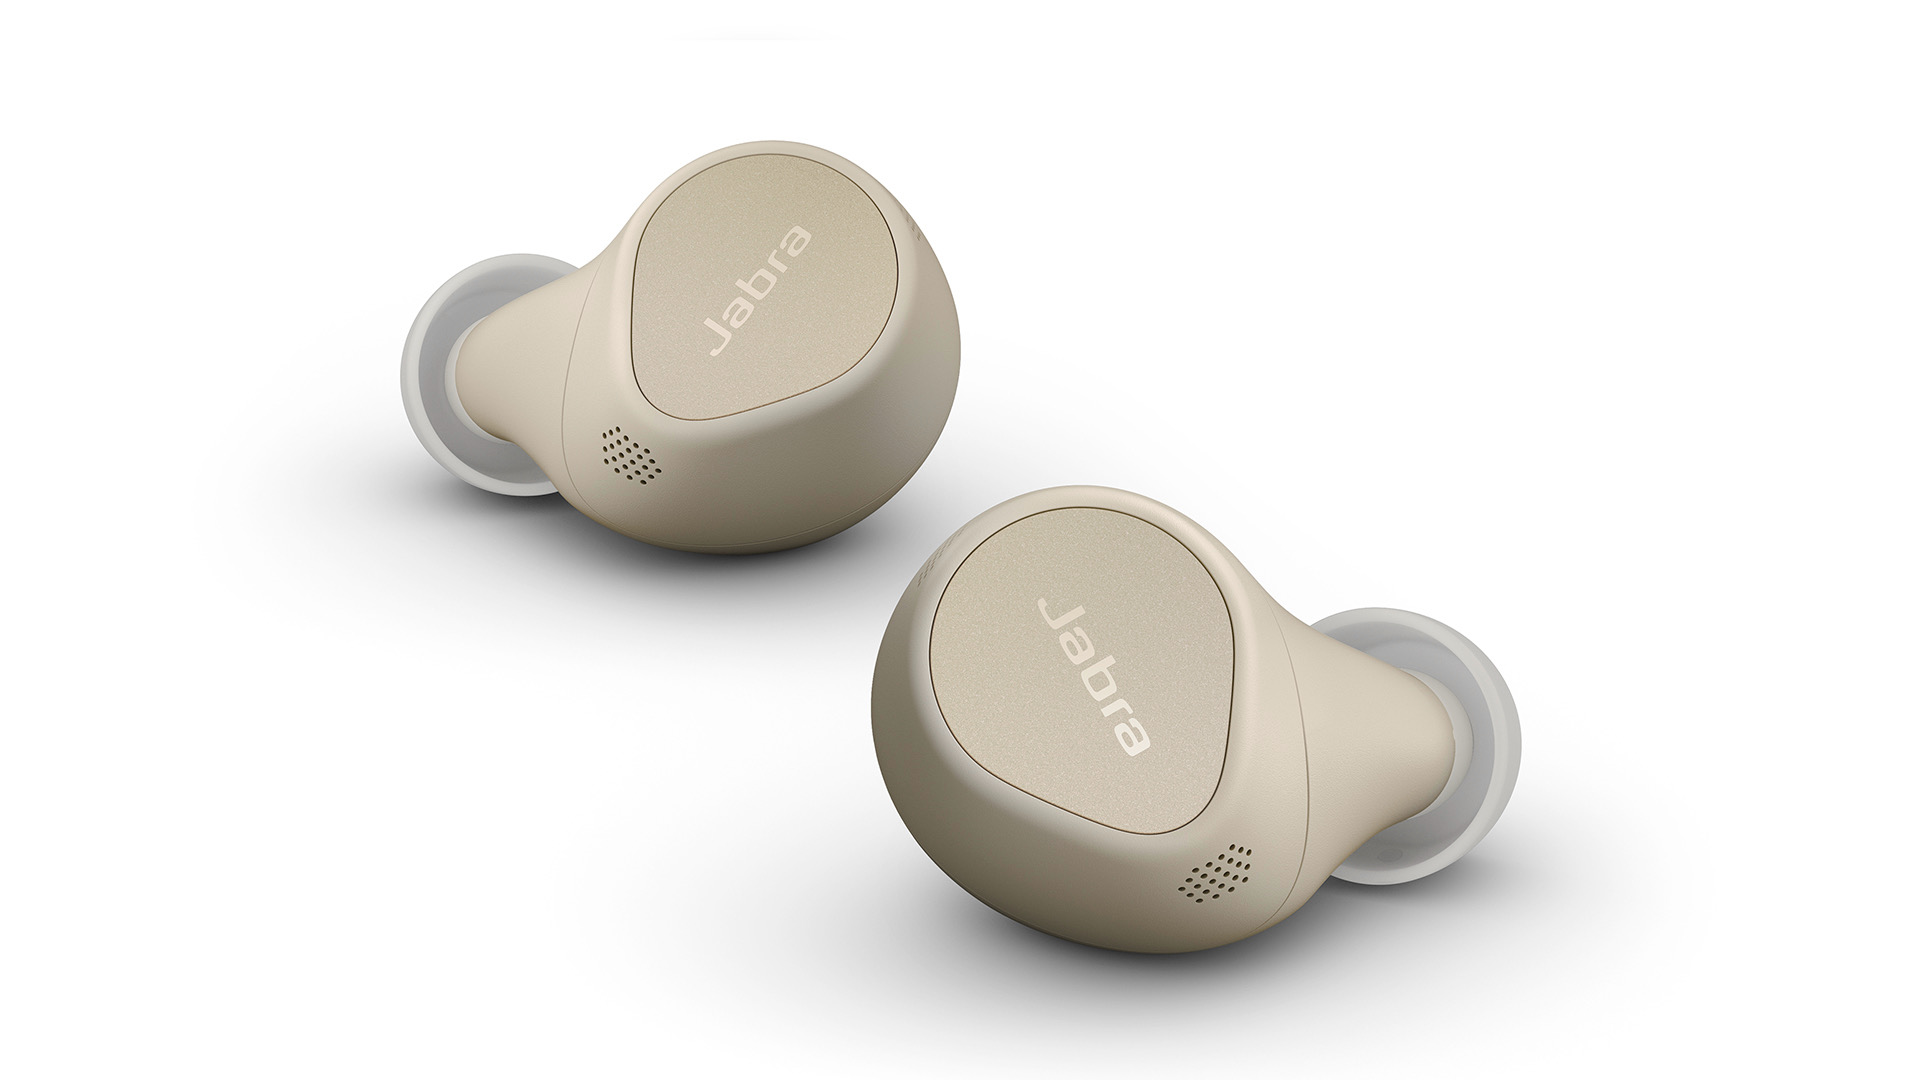 Jabra Elite 7 Pro true wireless earbuds focus on calls as well as